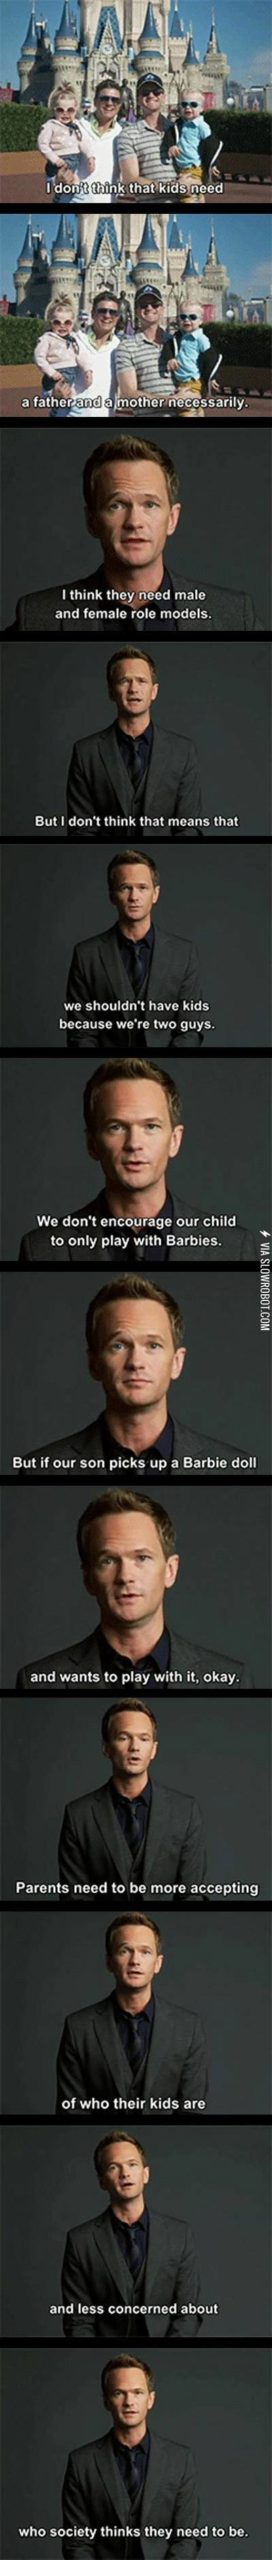 Neil+Patrick+Harris+on+parenting.